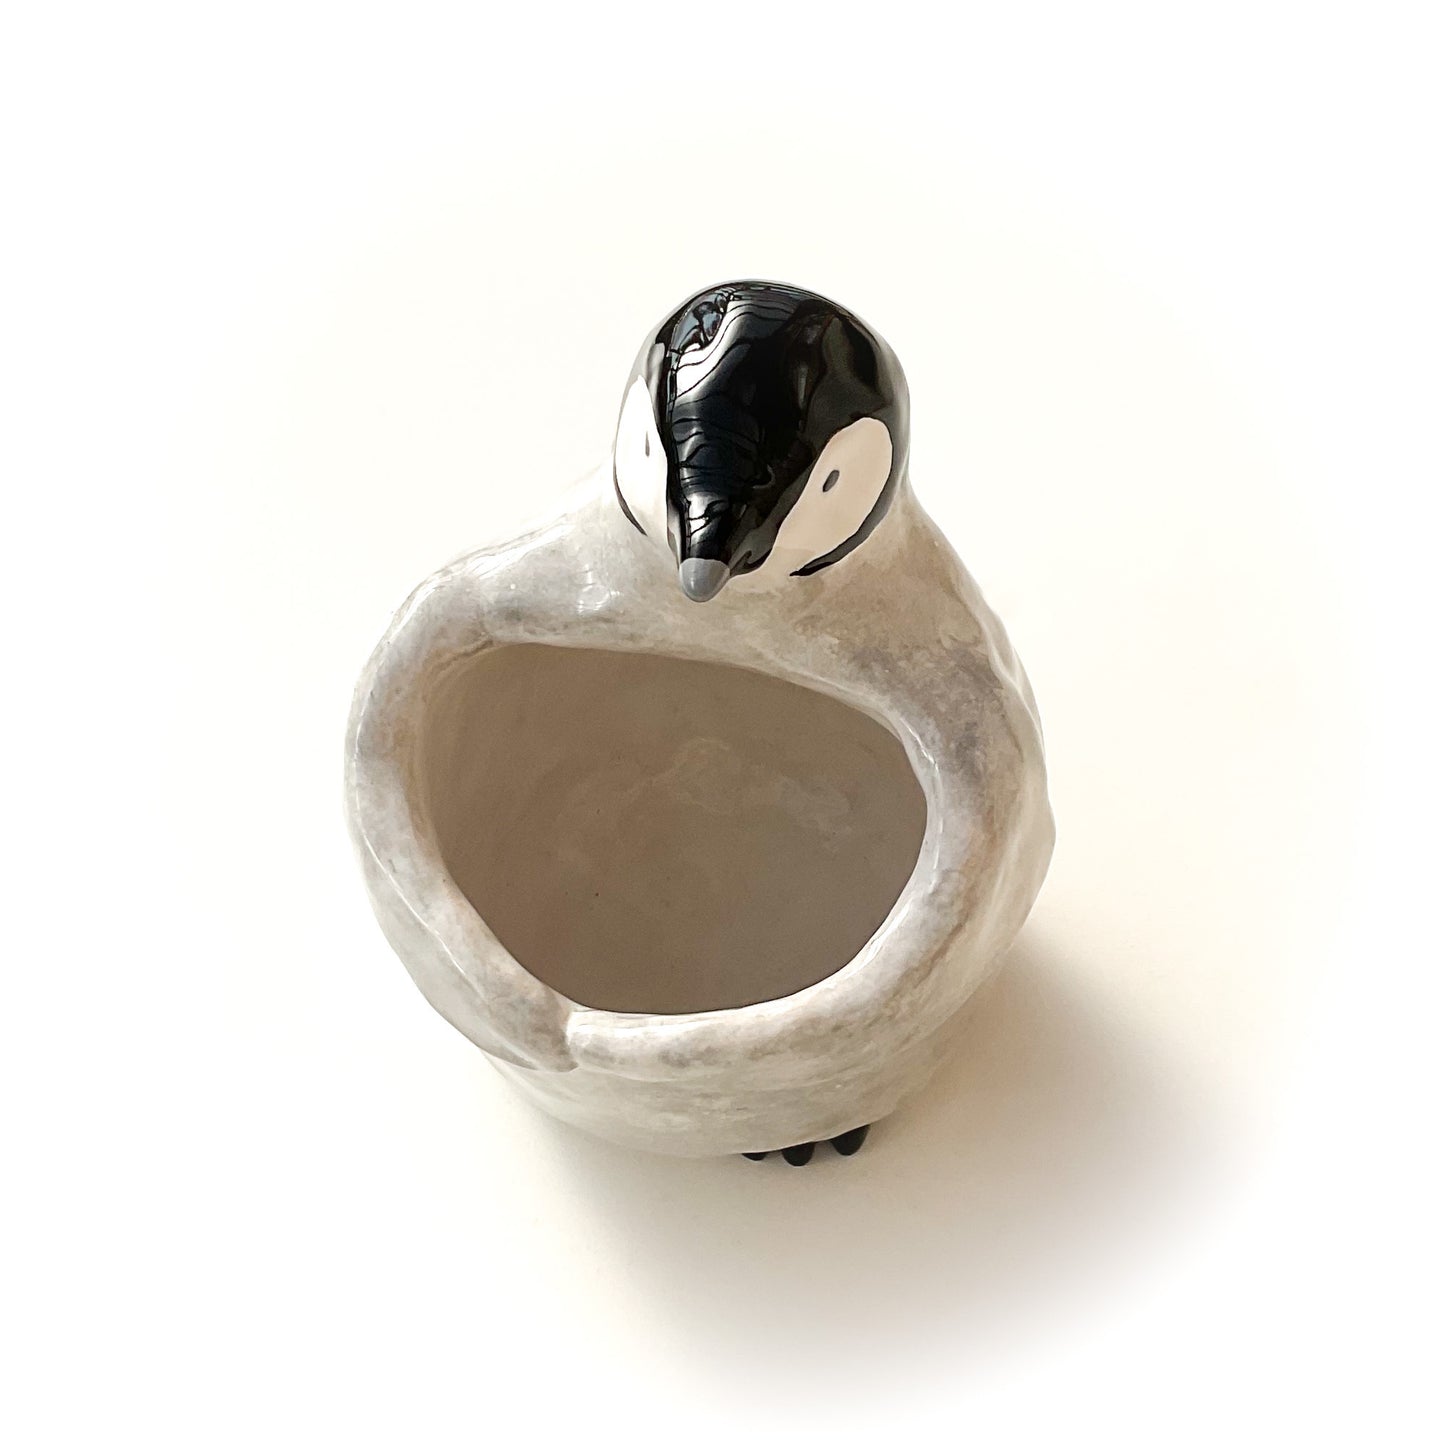 Baby Emperor Penguin Pot - Ceramic Penguin Planter